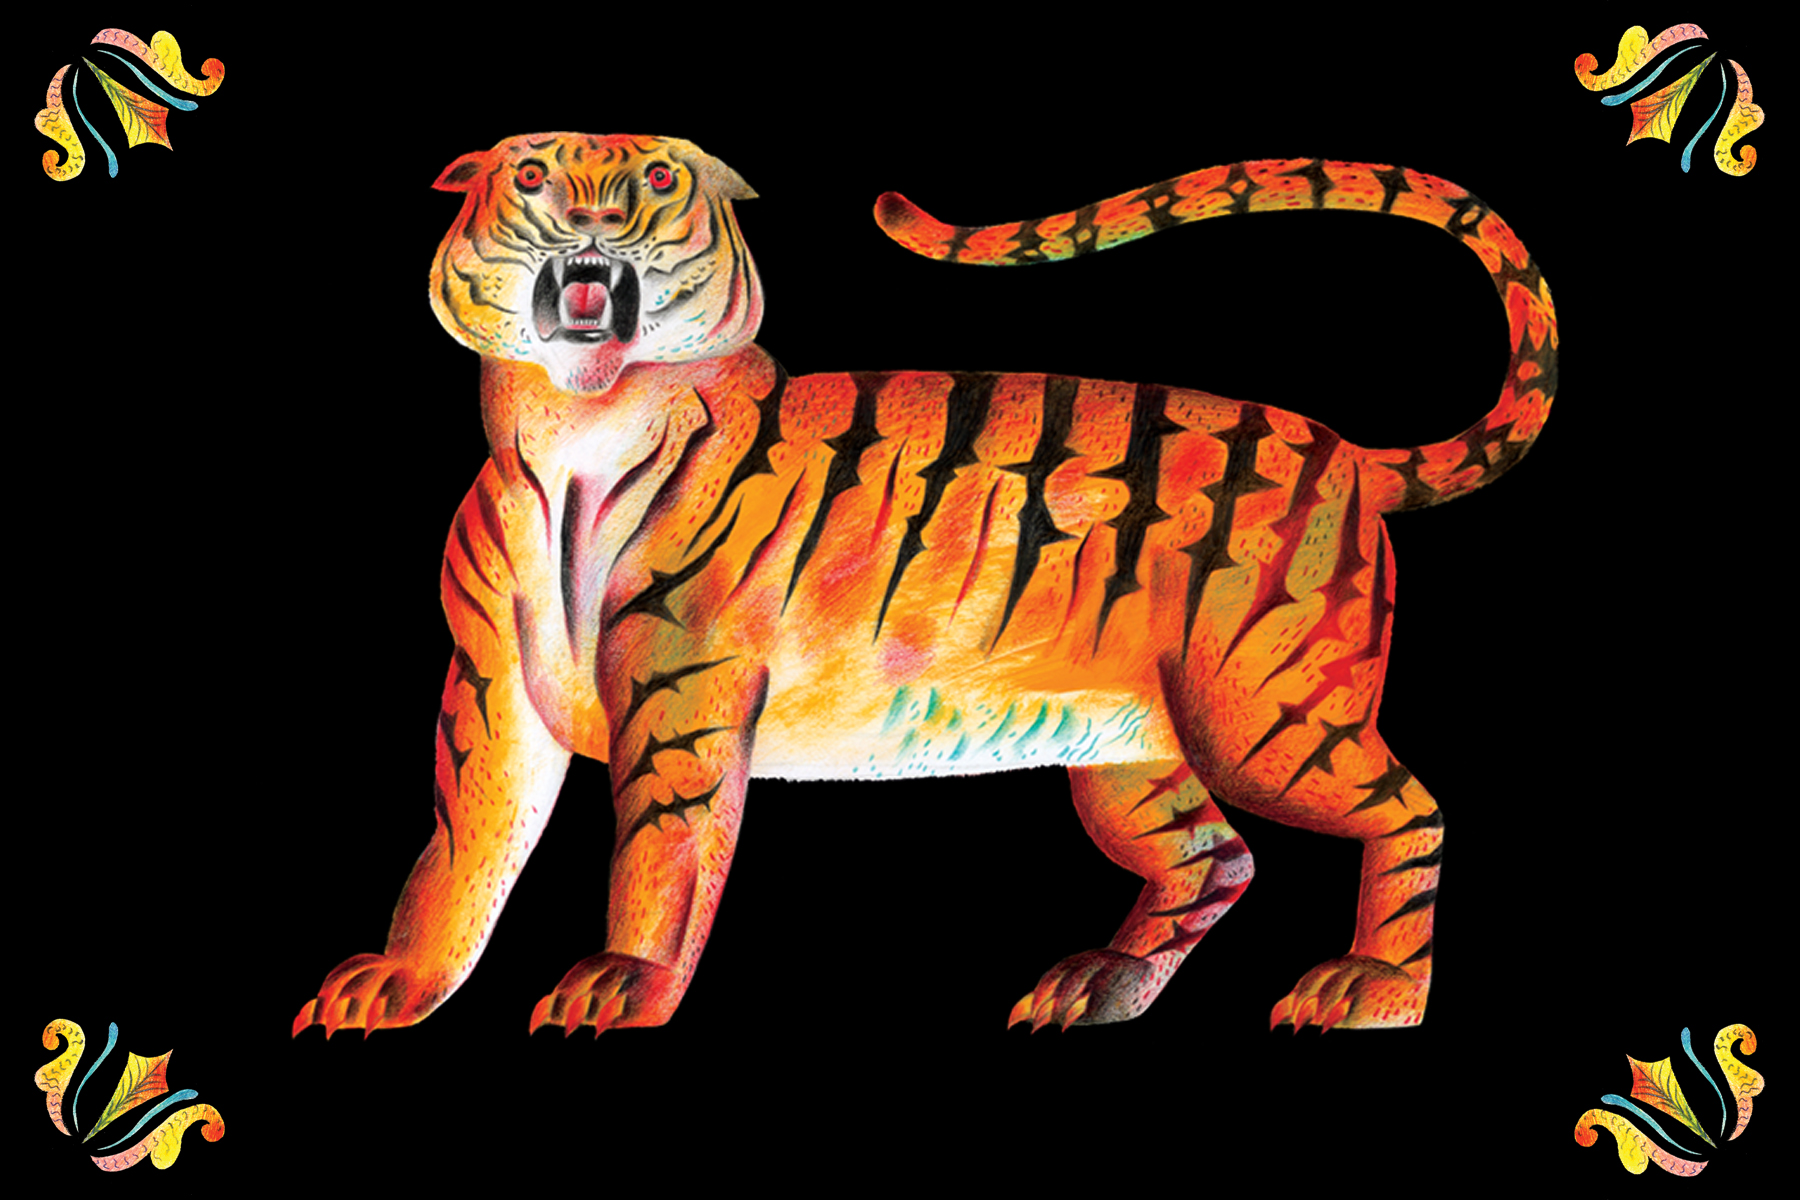 Illustration of a roaring tiger inside a decorative border